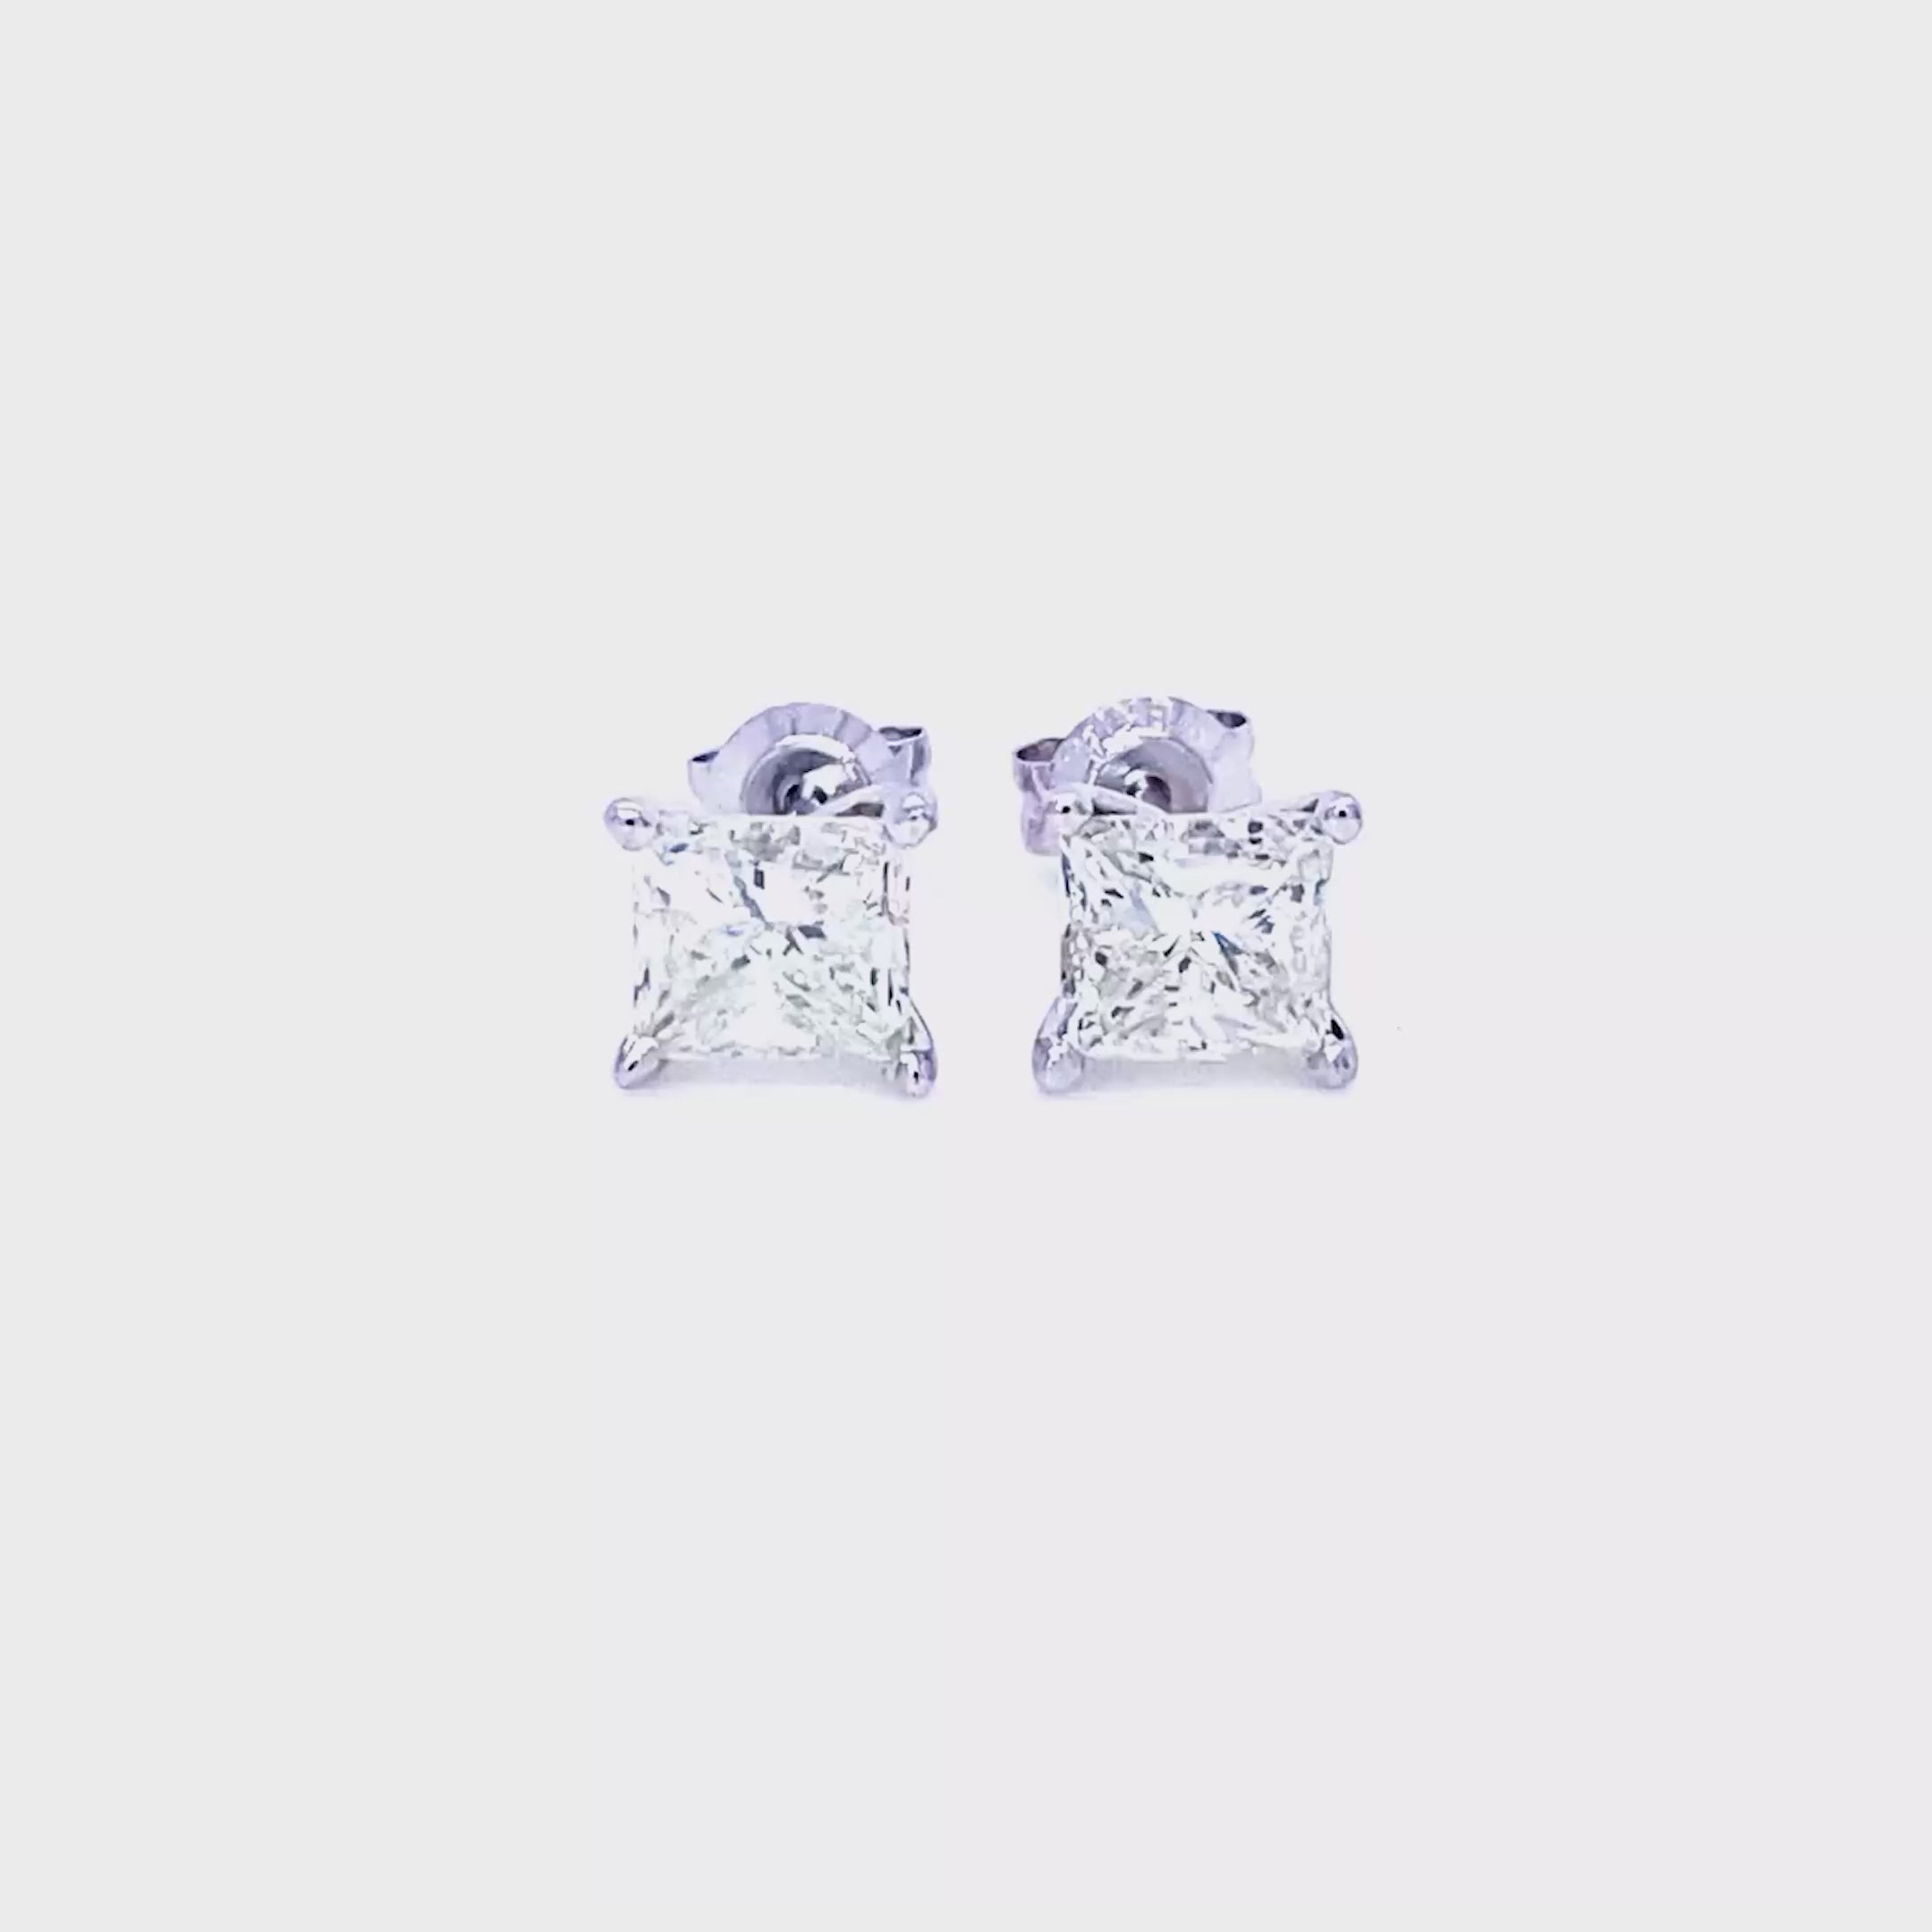 Certified 2.00CT Princess Cut Diamond Stud Earrings in 14KT White Gold